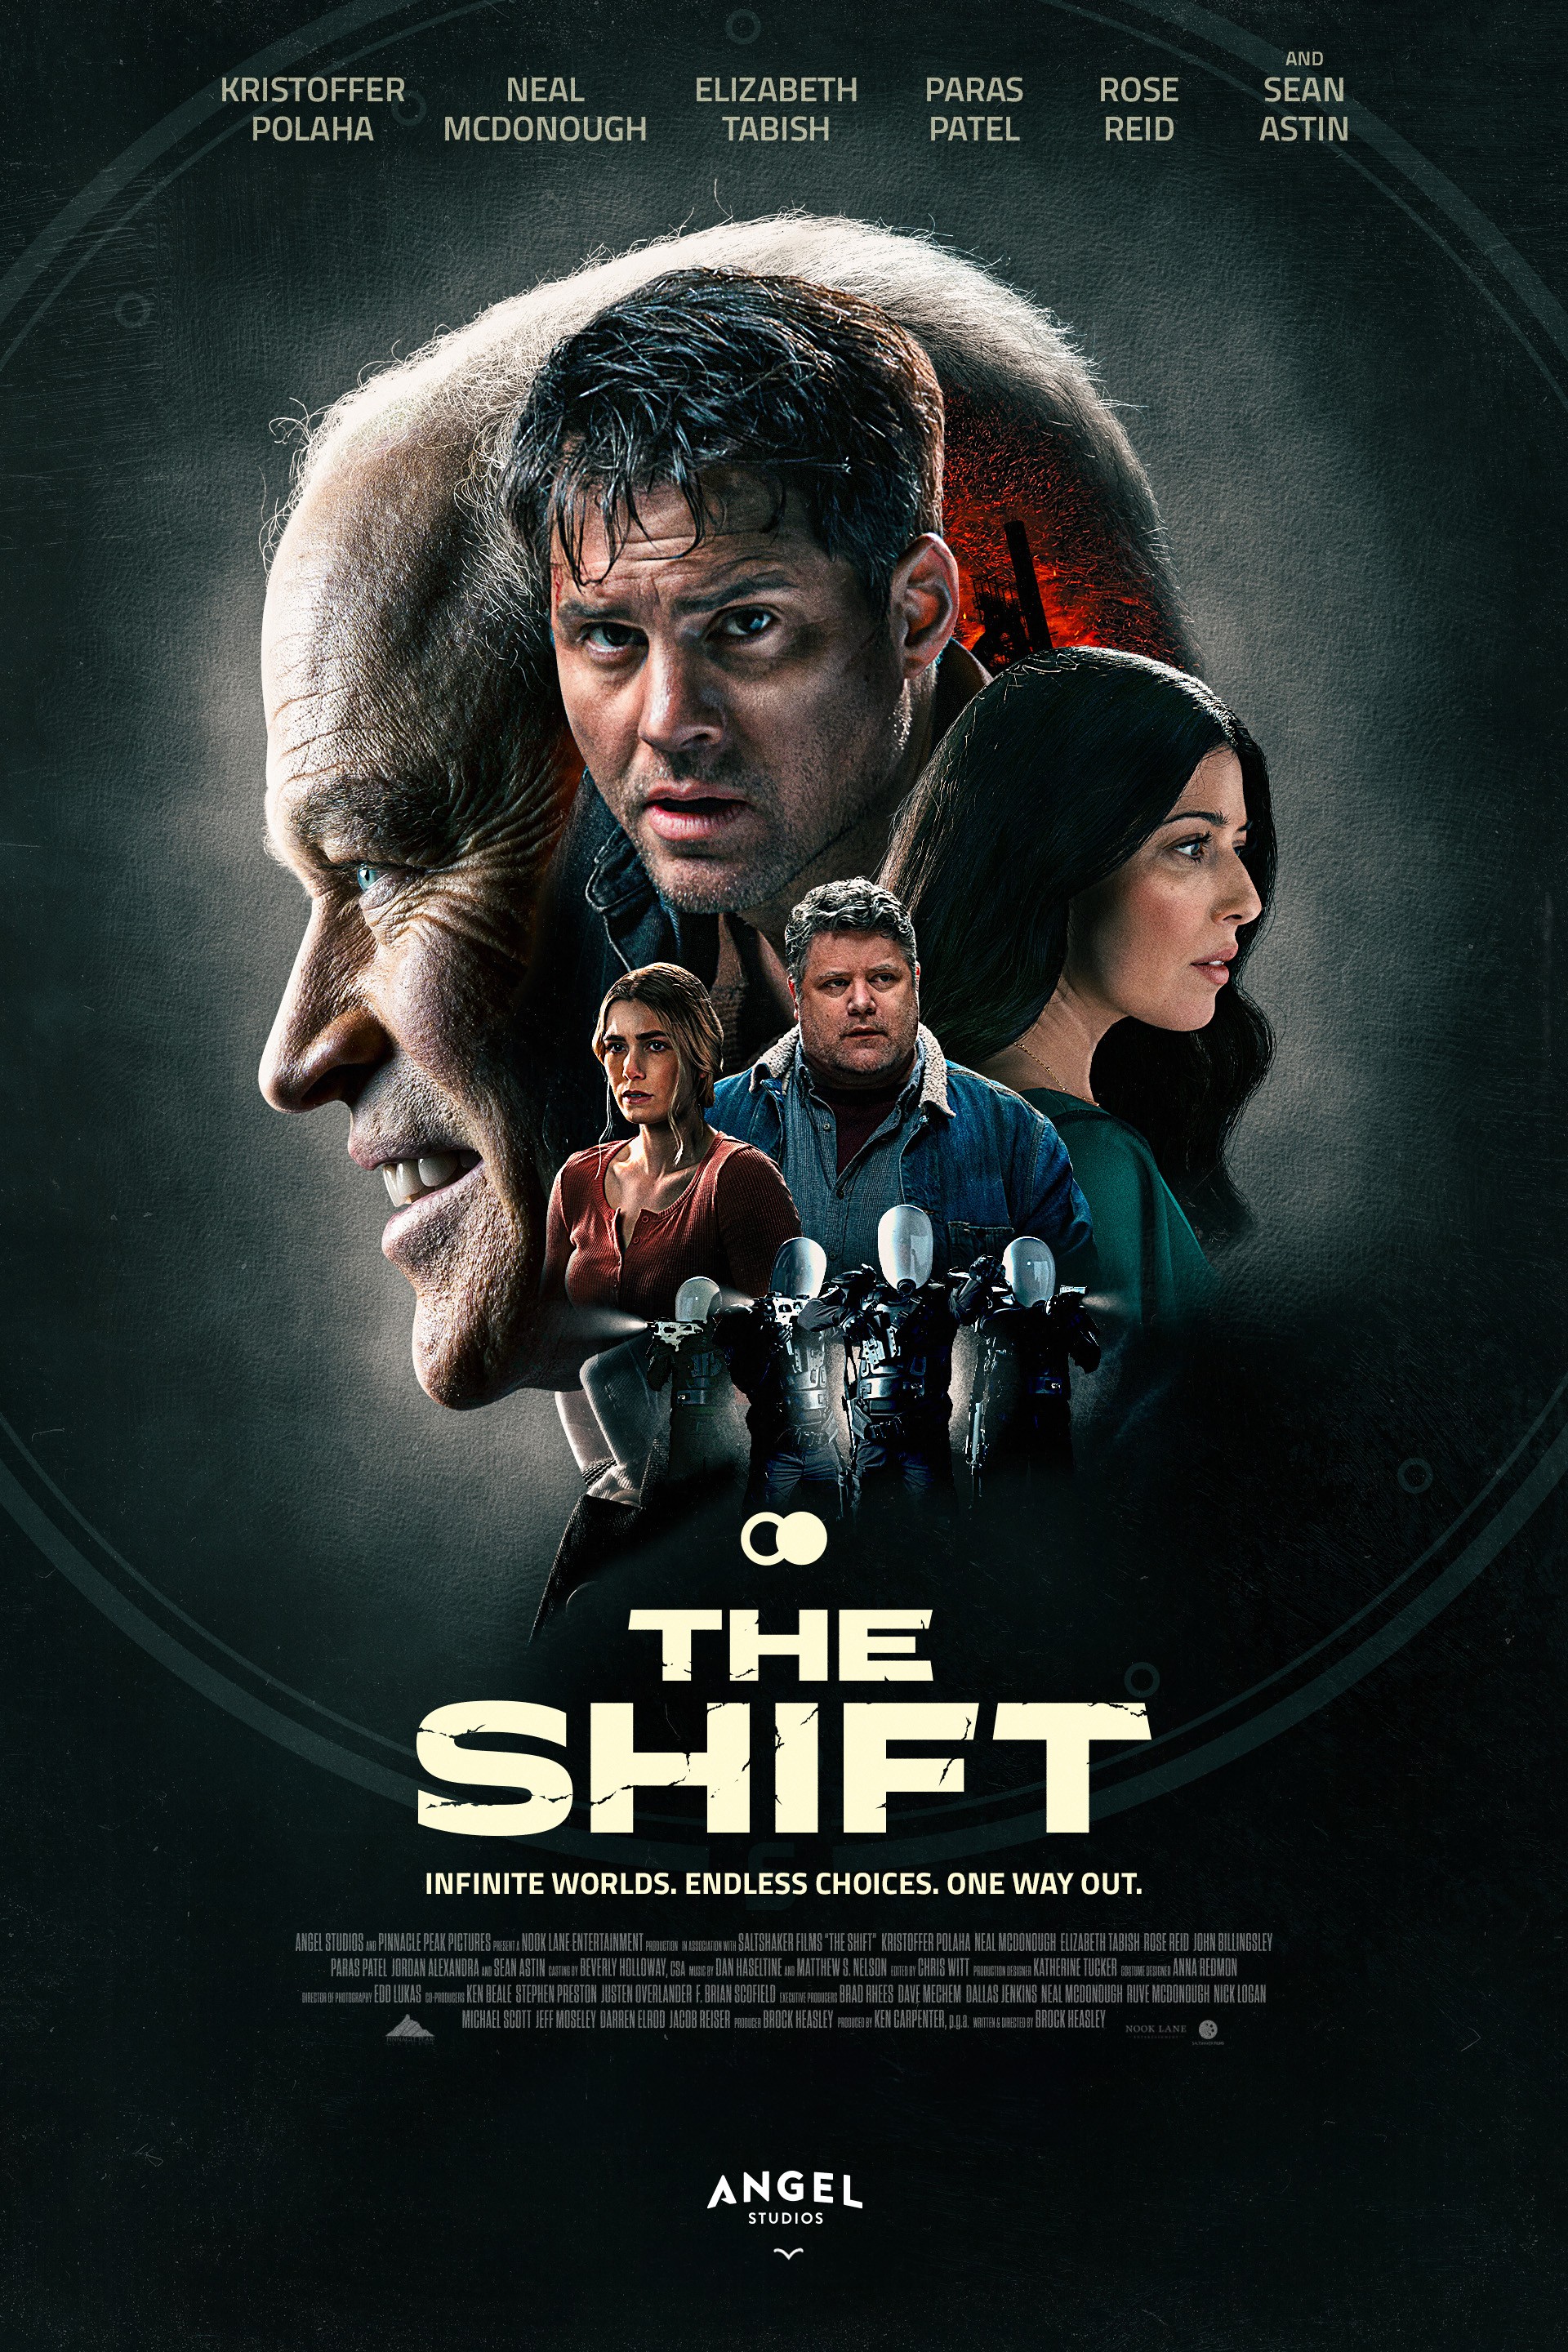 The Night Shift - Rotten Tomatoes